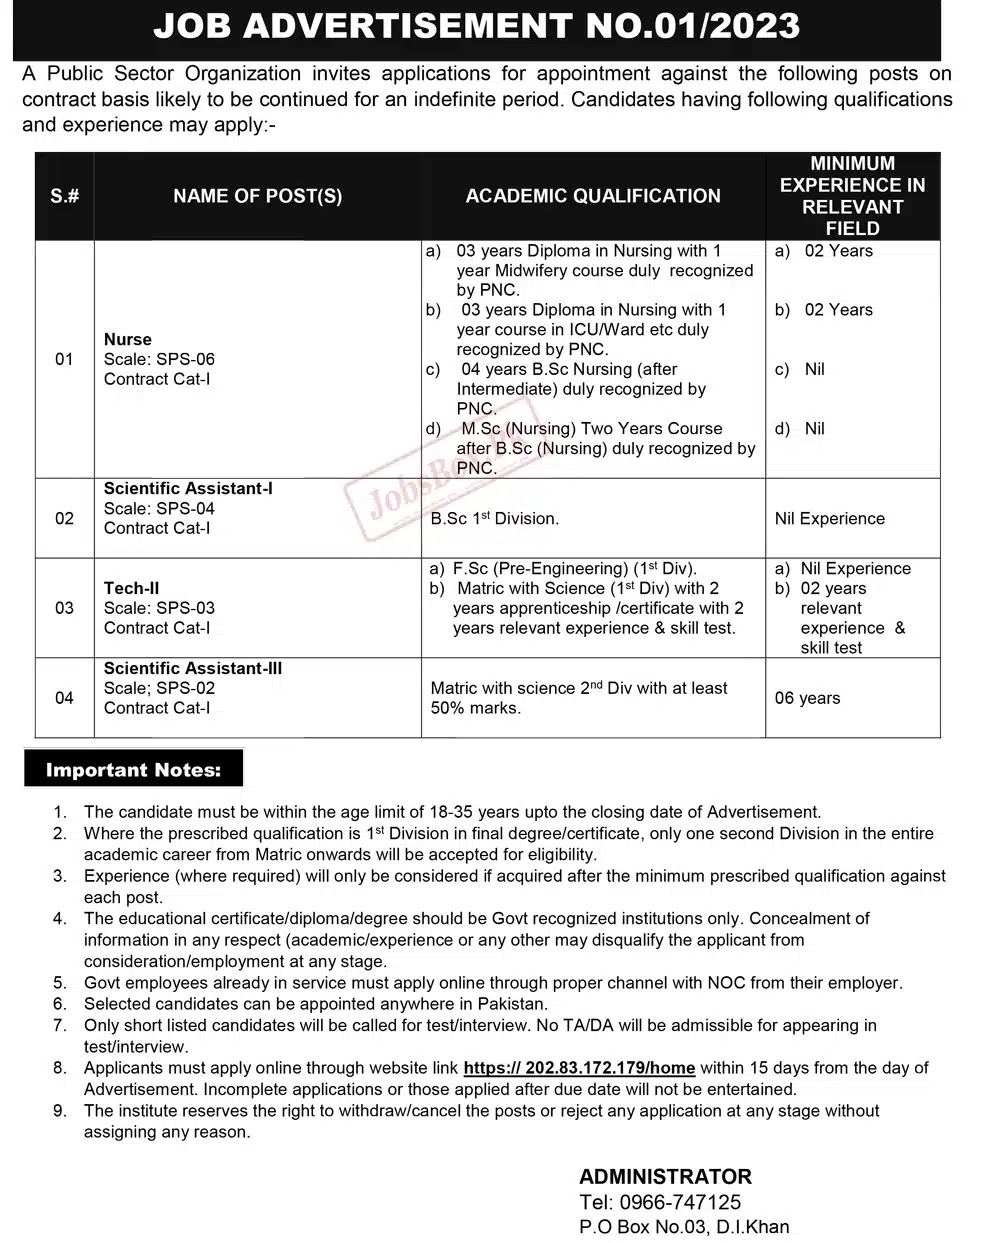 Pakistan Atomic Energy Commission PAEC Jobs 2023 - Latest Advertisement